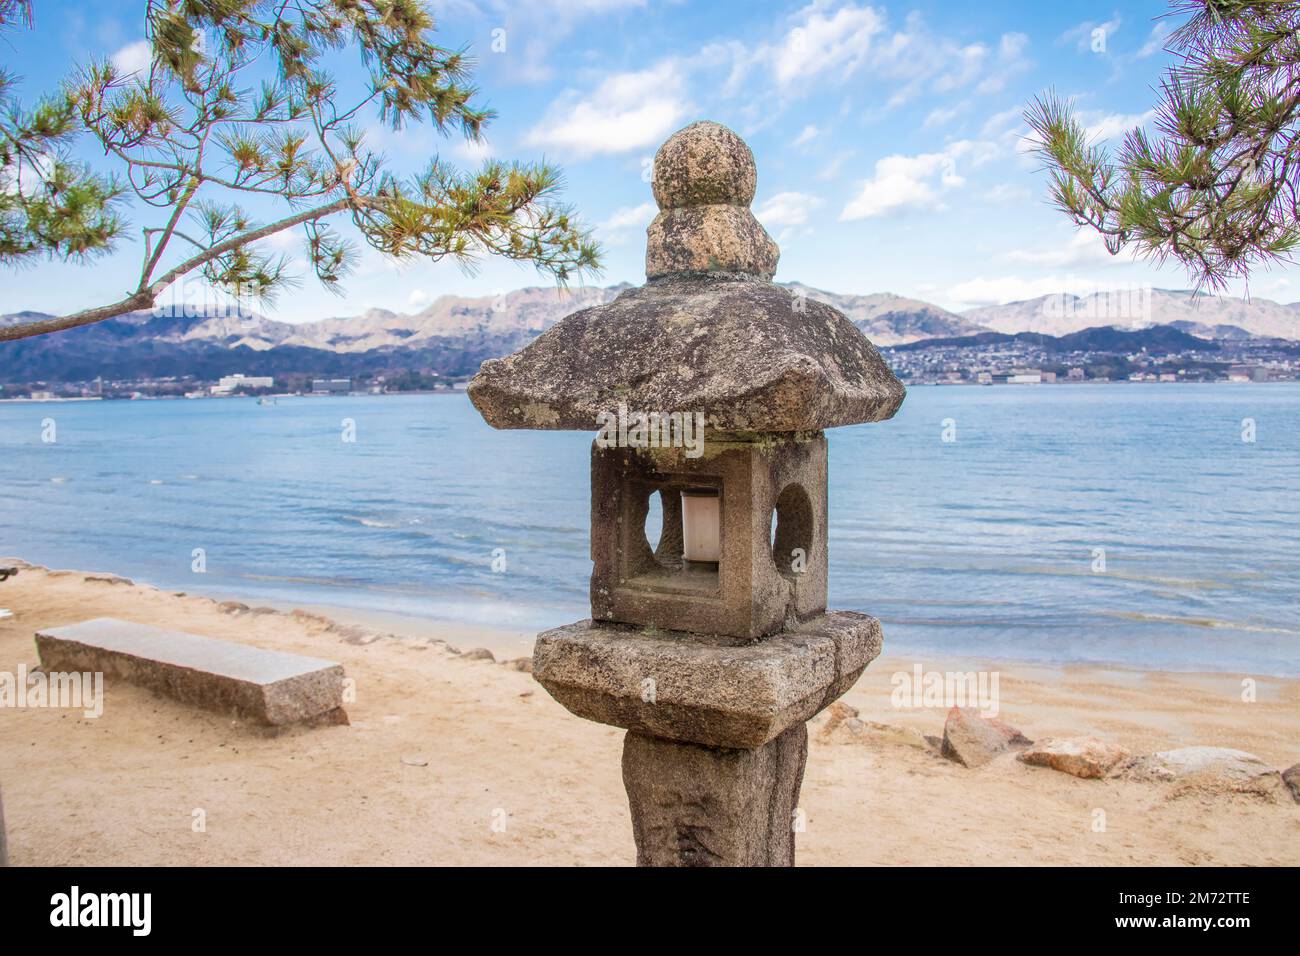 The stone latern in the island of Miyajima. Background is the city view of Miyajima guchi Japan. Stock Photo